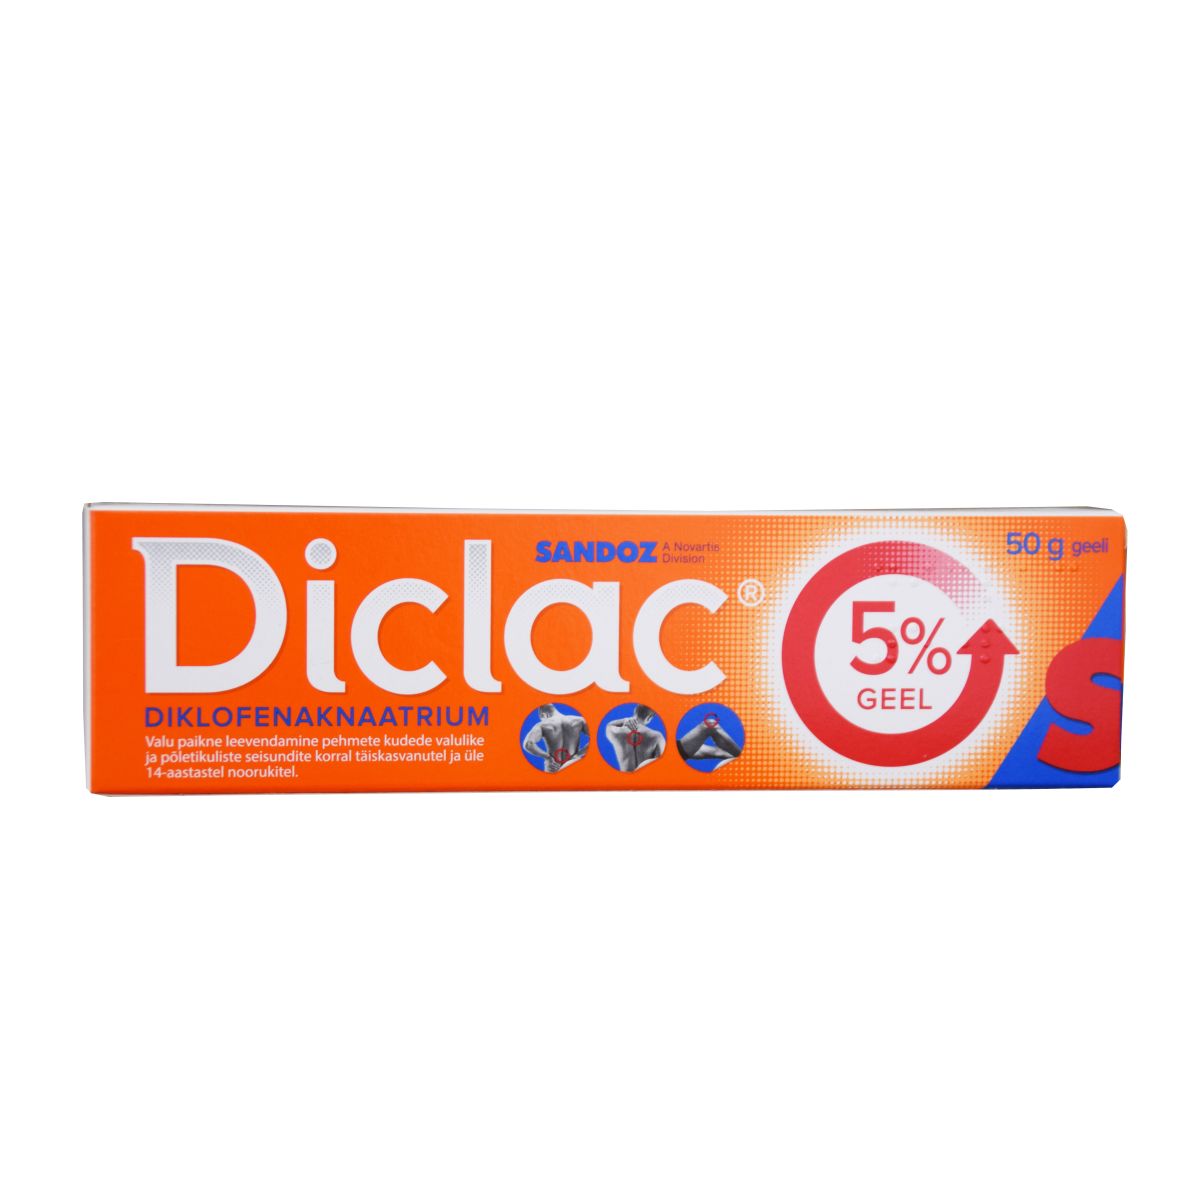 DICLAC 5% GEEL 50MG/G 50G